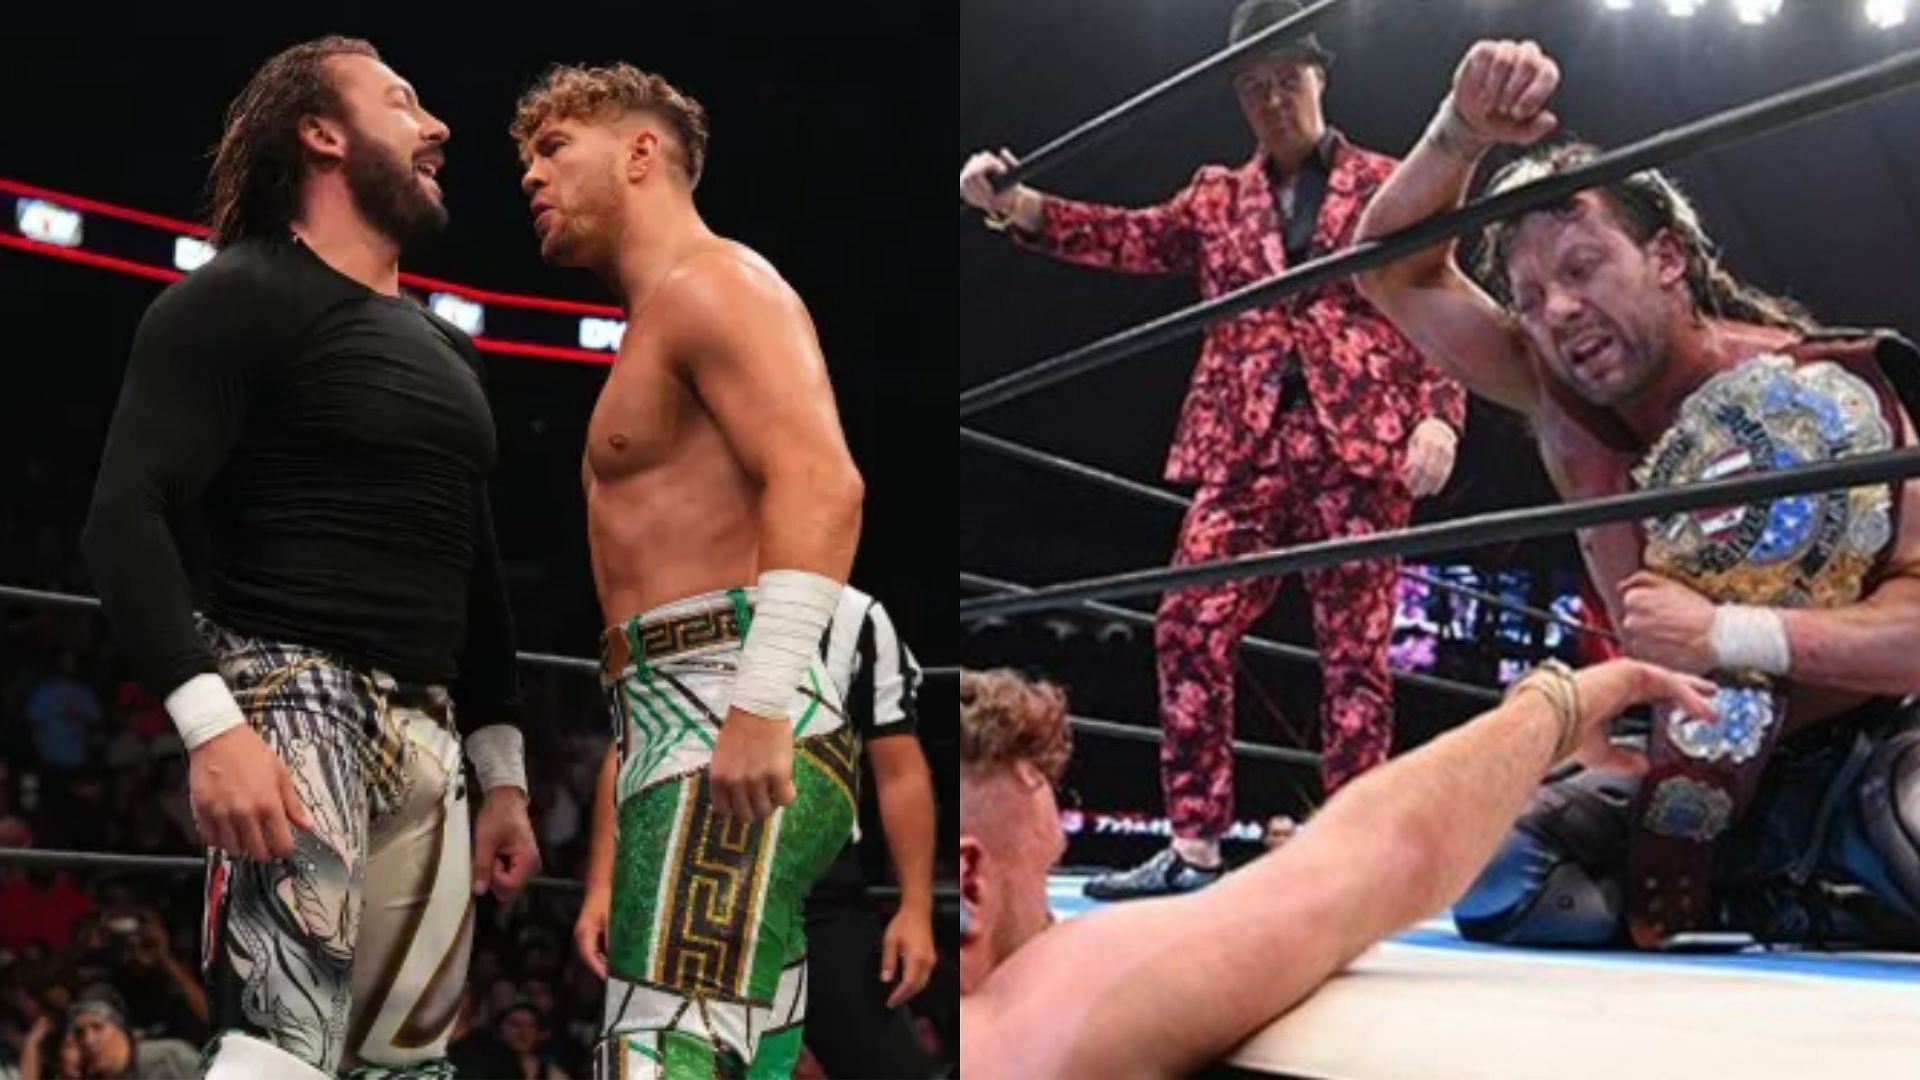 Kenny Omega returned to NJPW at Wrestle Kingdom 17